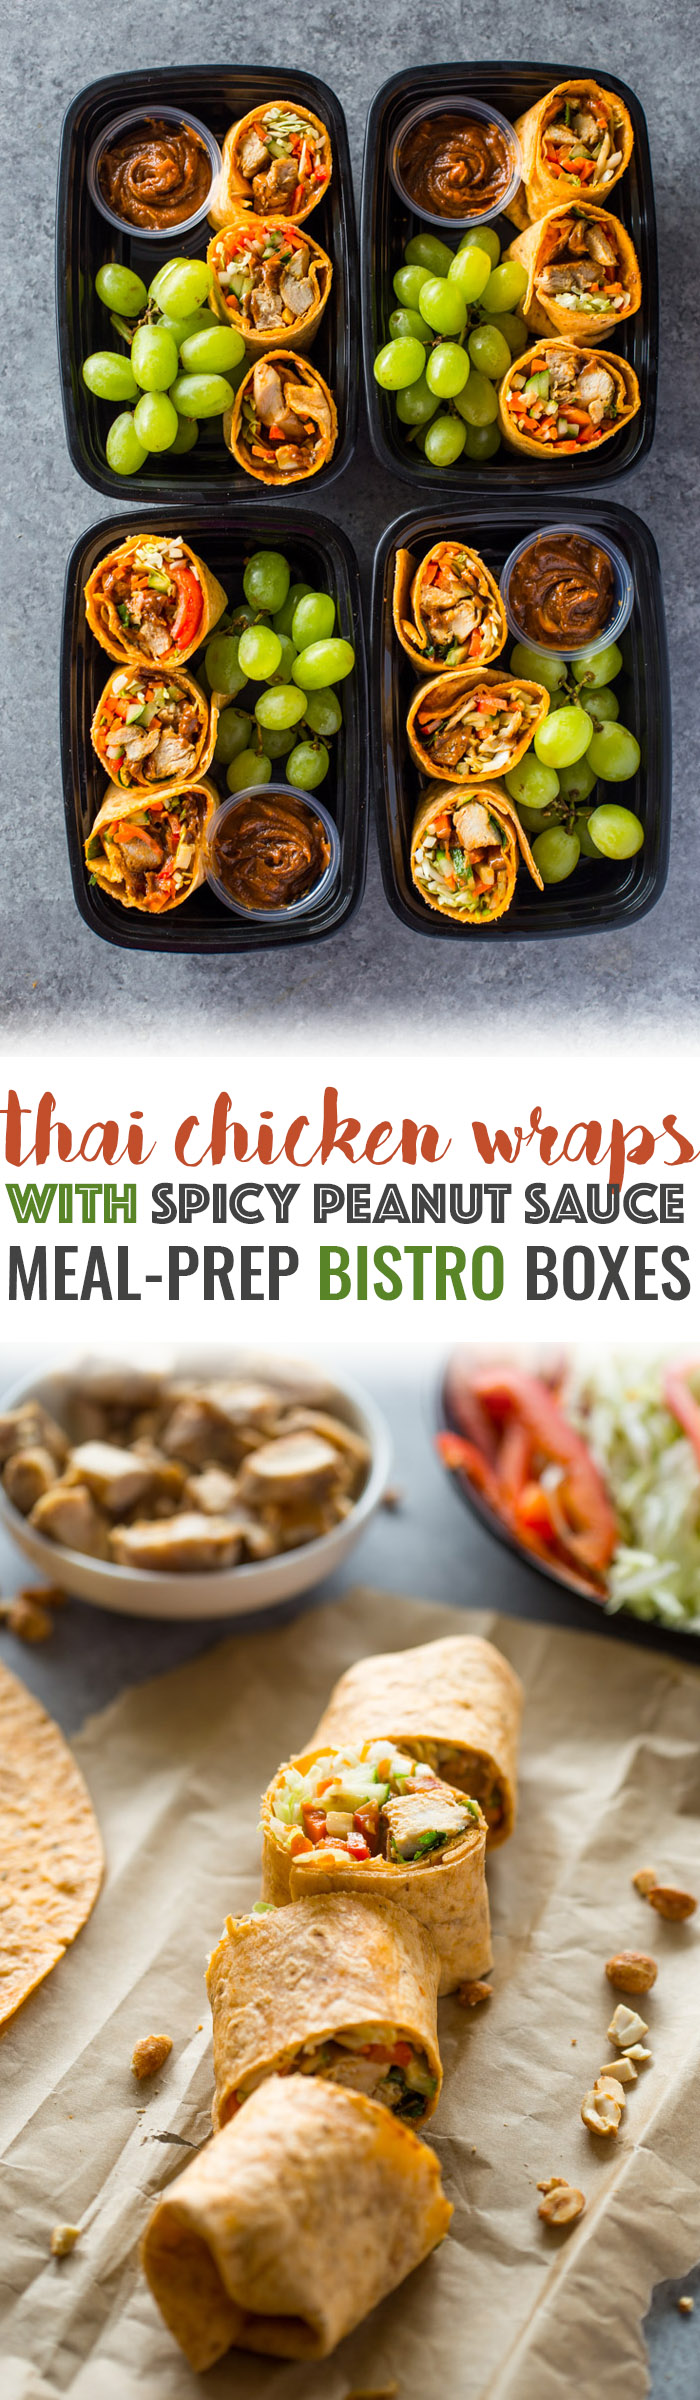 Thai Chicken Wraps Meal-Prep Bistro Boxes